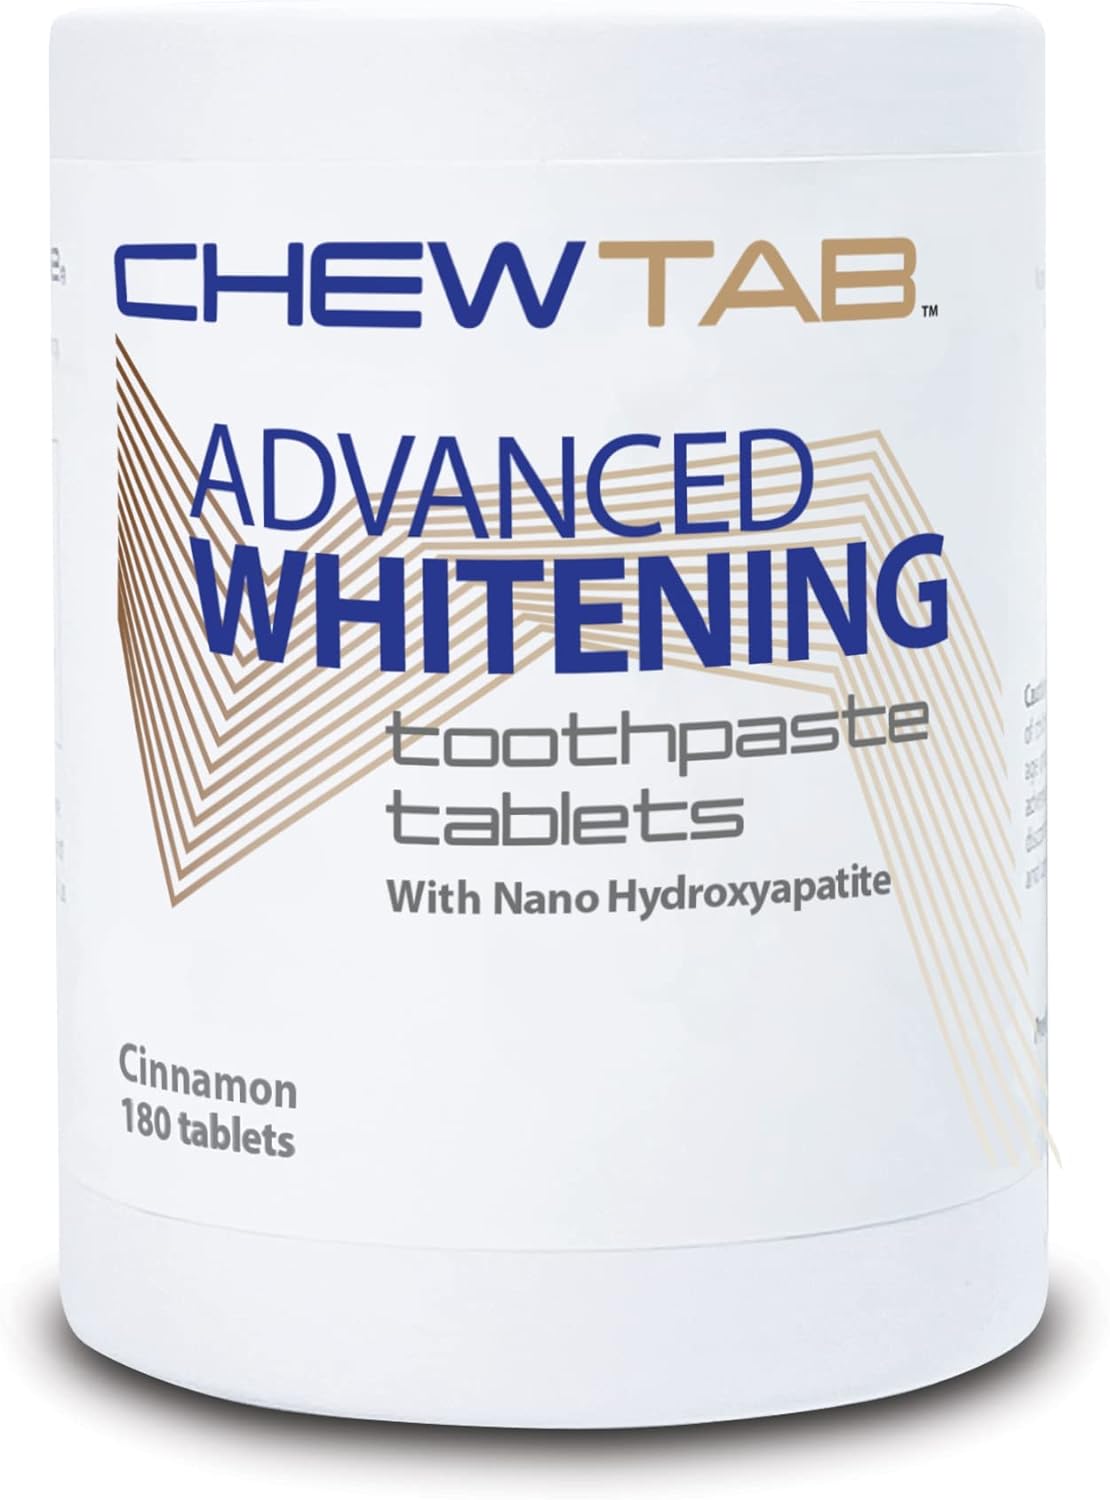 Chewtab Advanced Whitening Toothpaste Tablets with Nano-Hydroxyapatite Cinnamon Refill